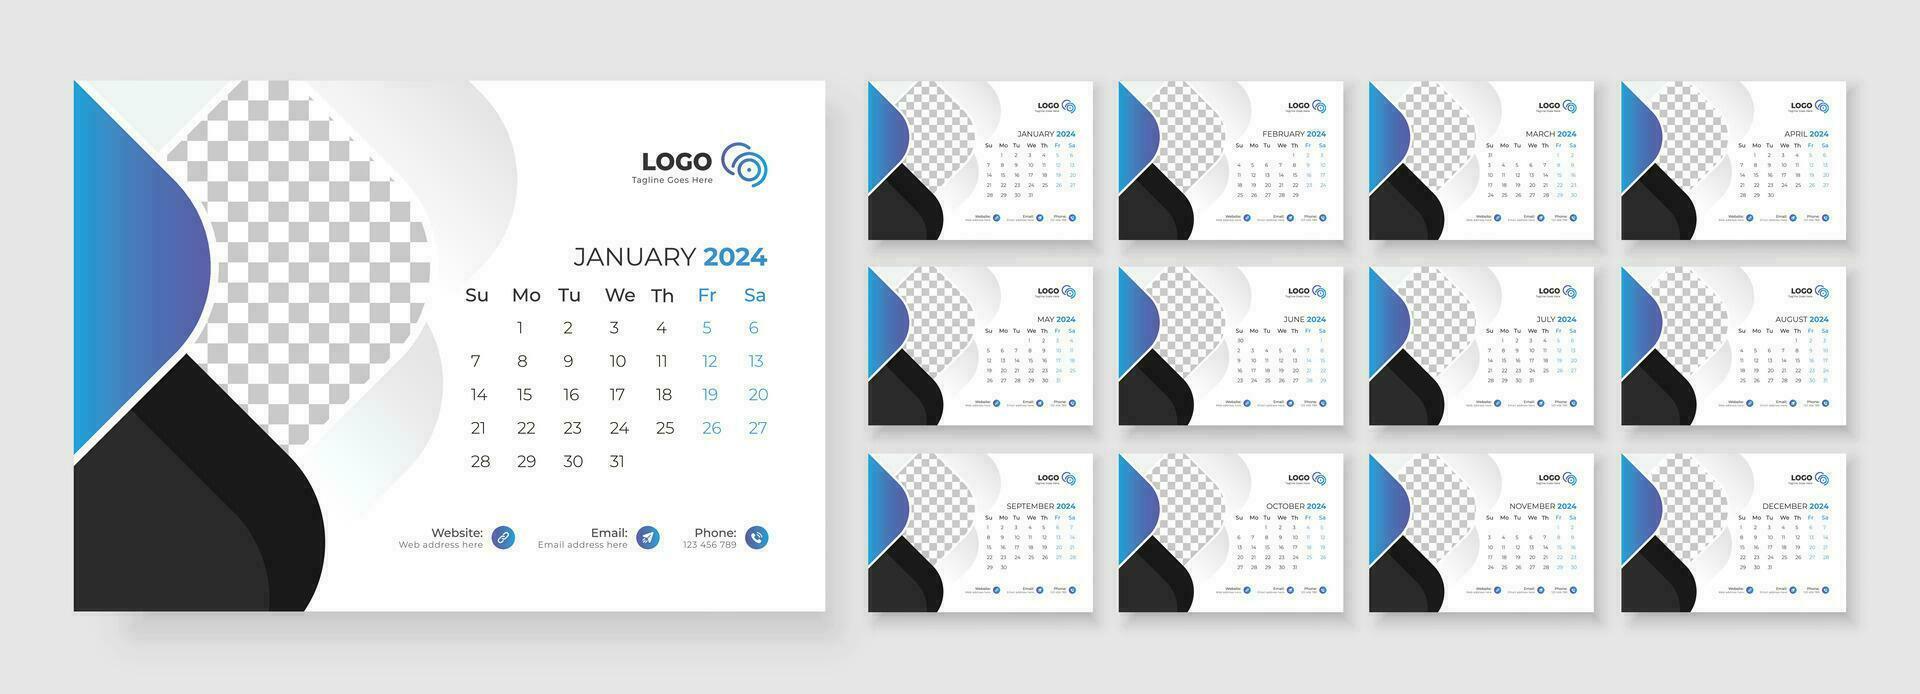 Desk Calendar Template 2024. Calendar 2024 planner corporate template design set. template for annual calendar 2024. Week starts on Sunday. vector